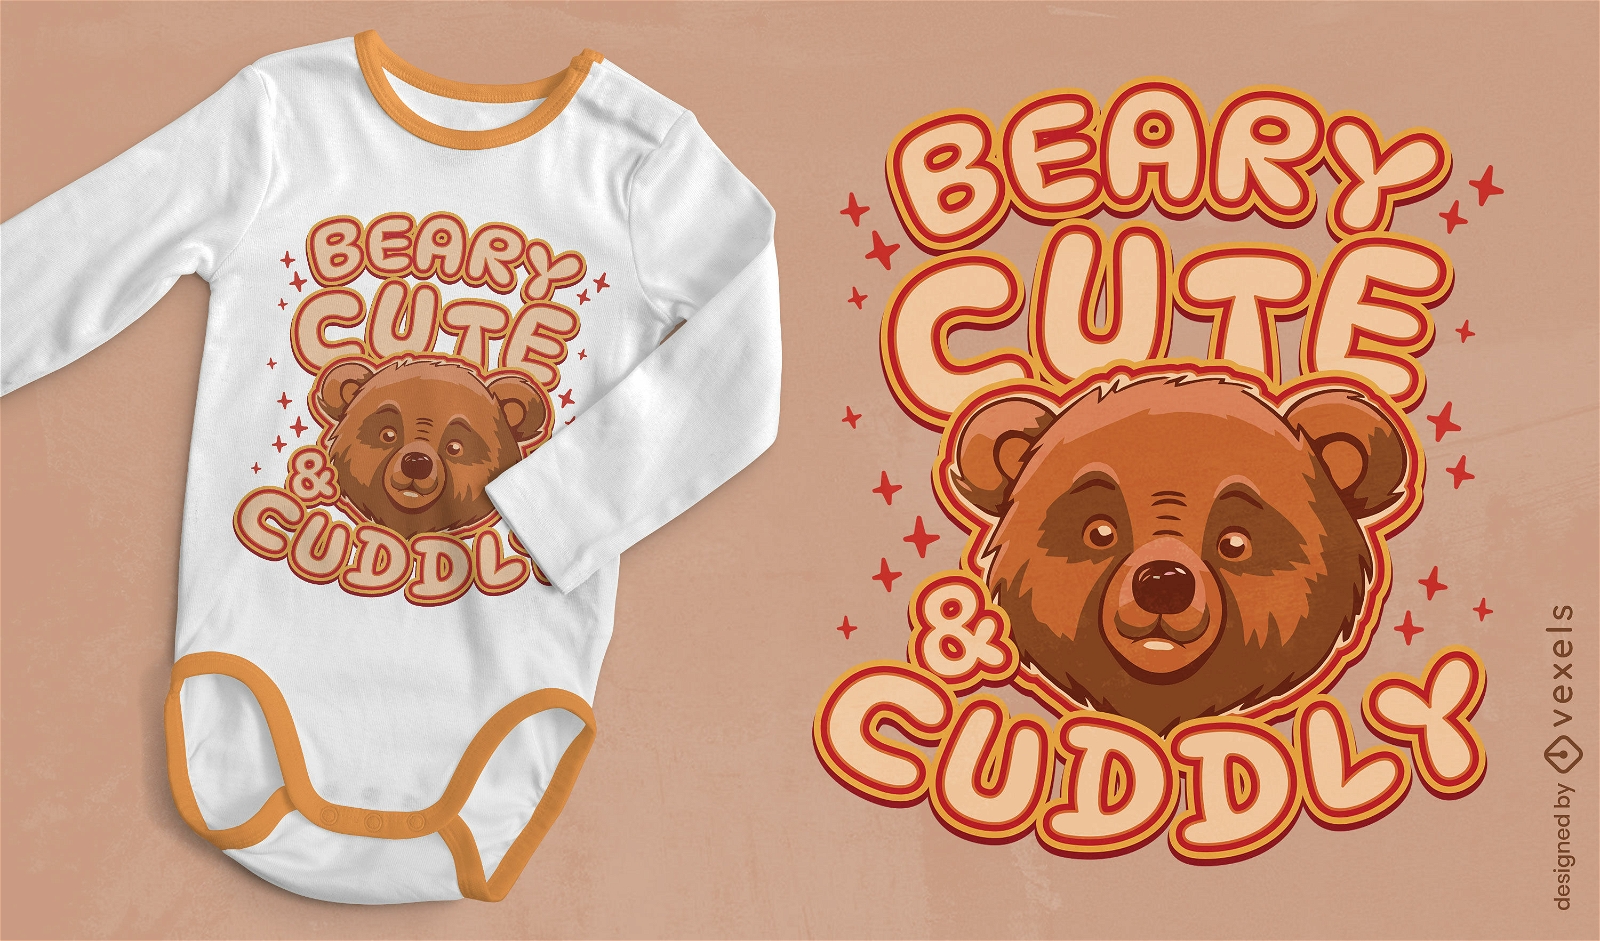 Baby bear animal cute t-shirt design